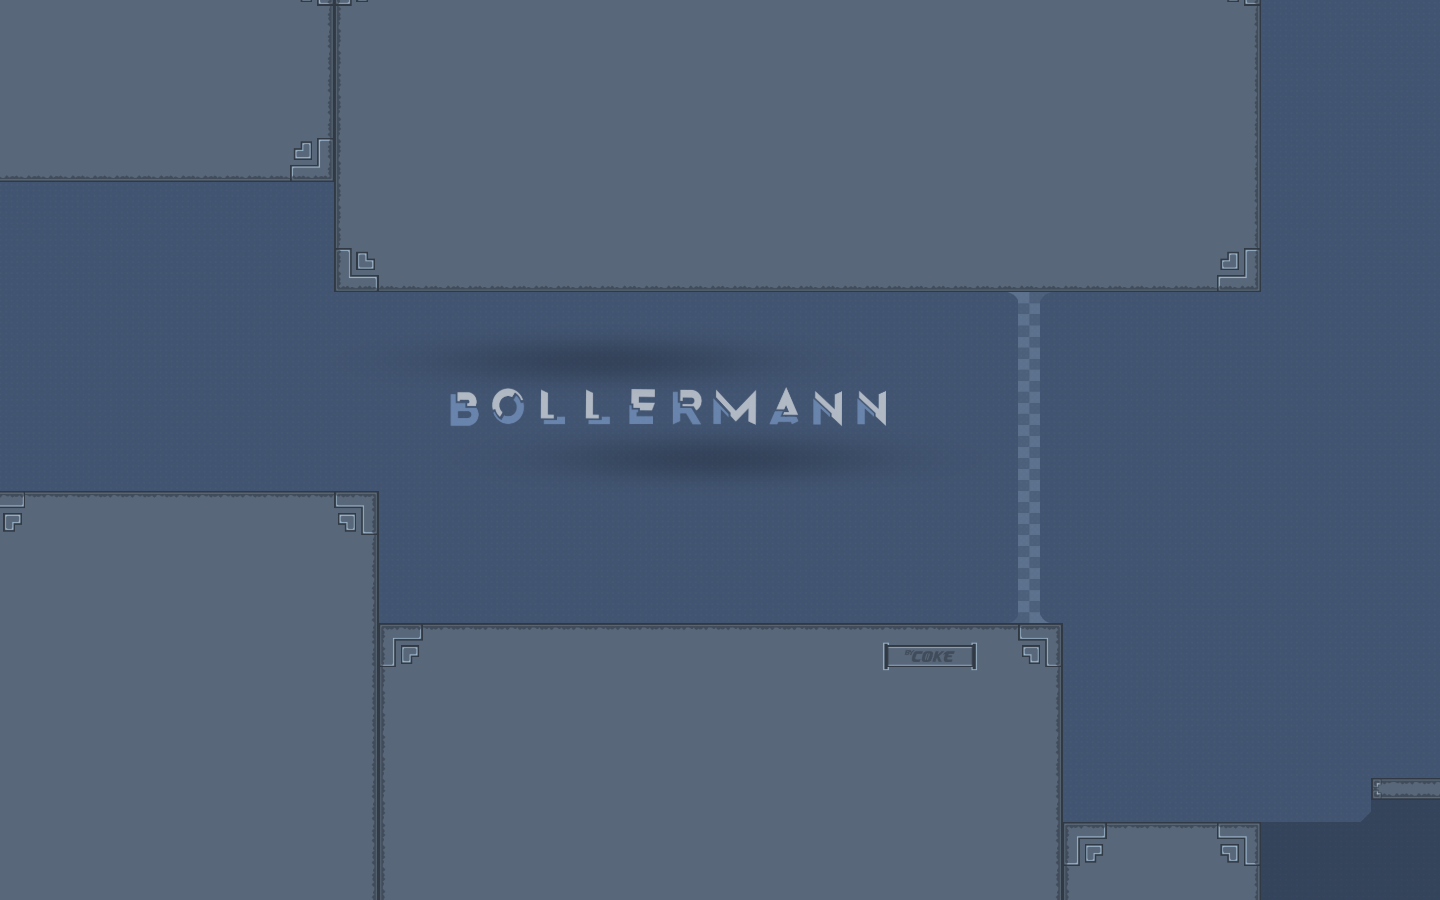 Bollermann.png